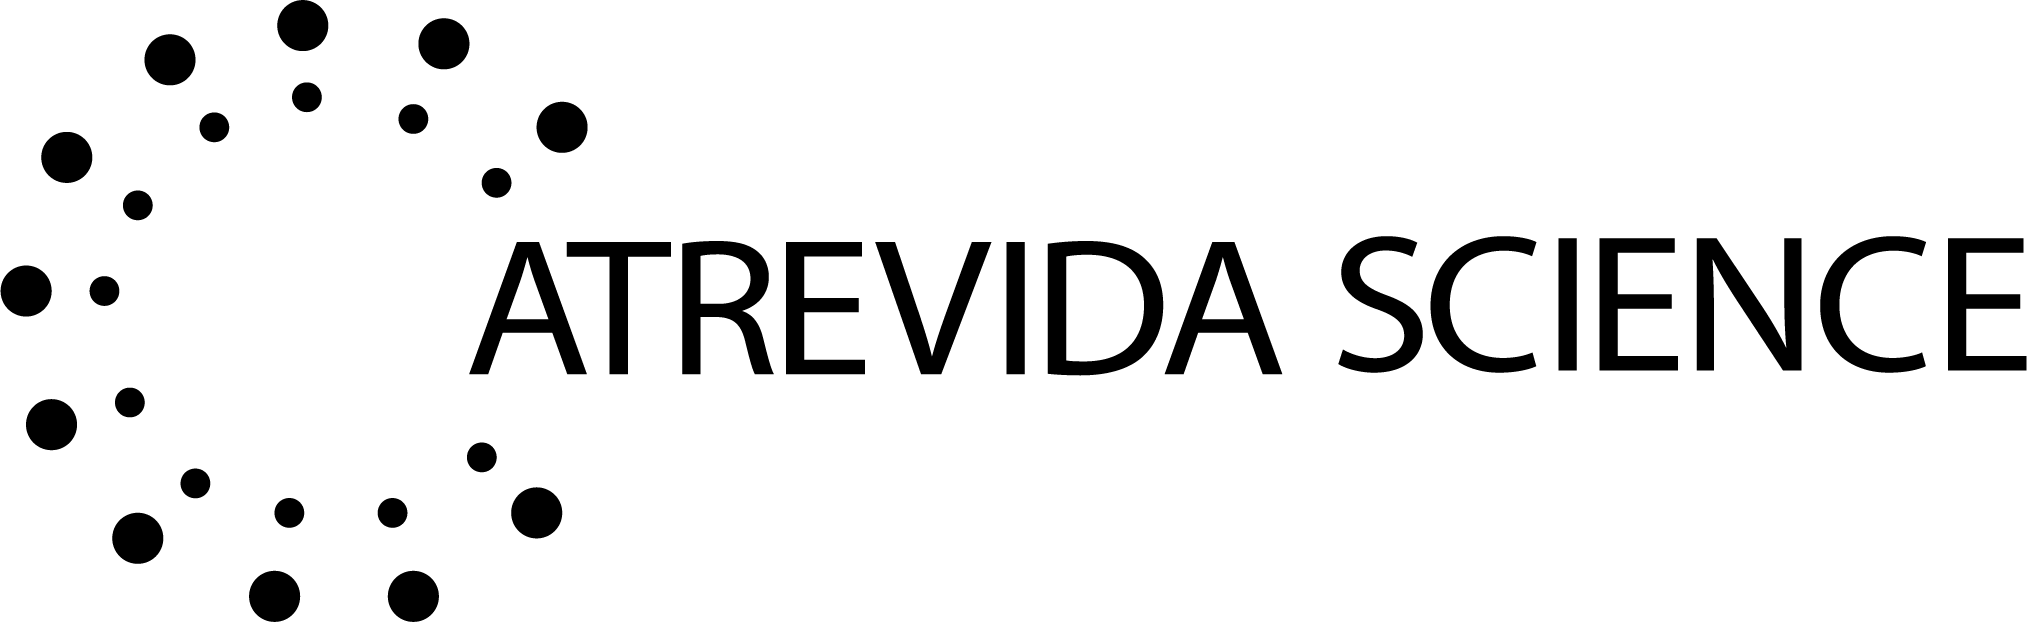 Atrevida Science Logo